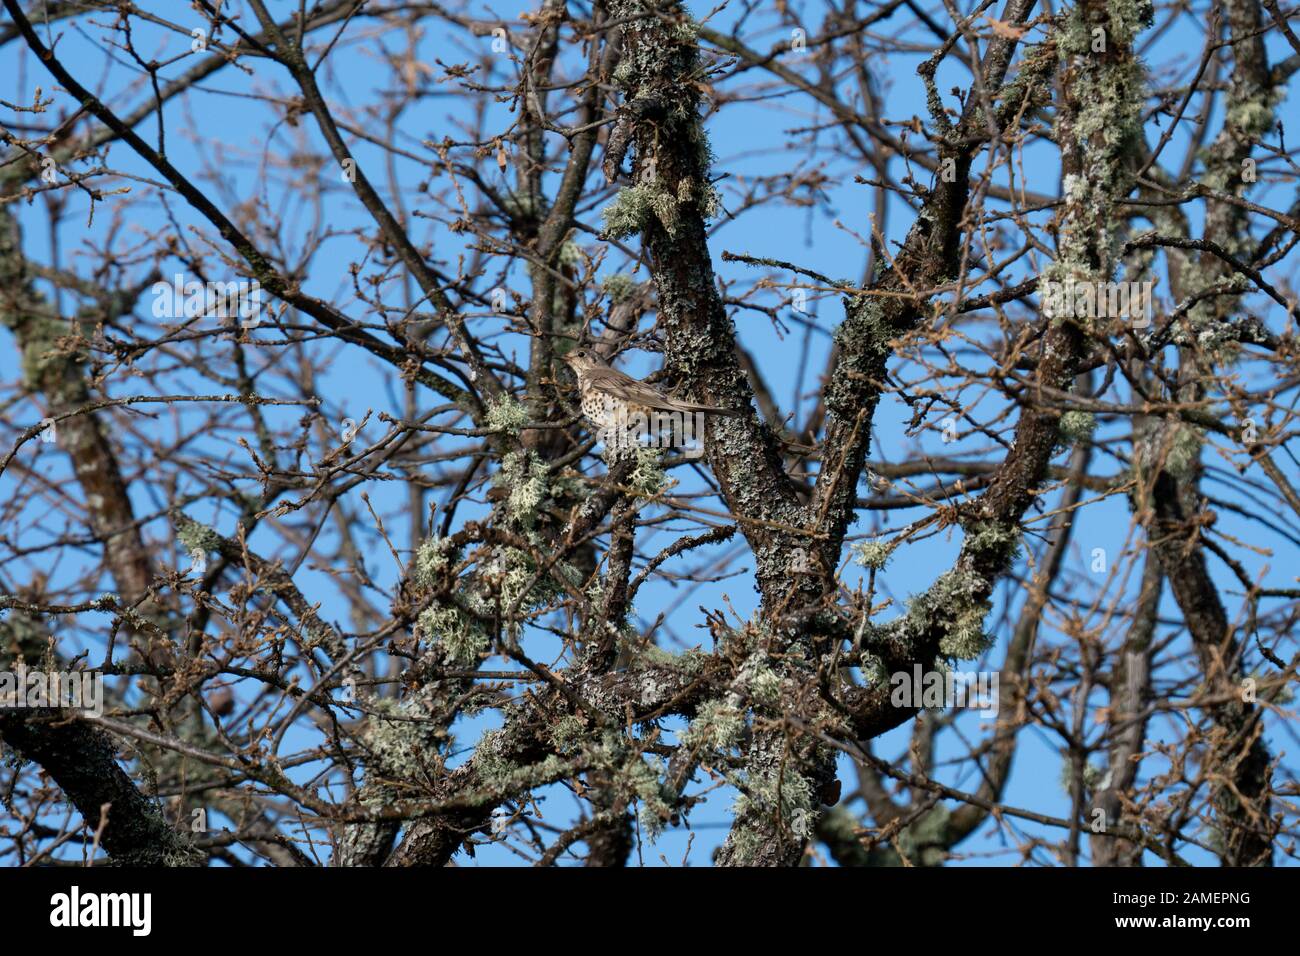 Thursh bird hidden in the tree branches, bottom view Stock Photo